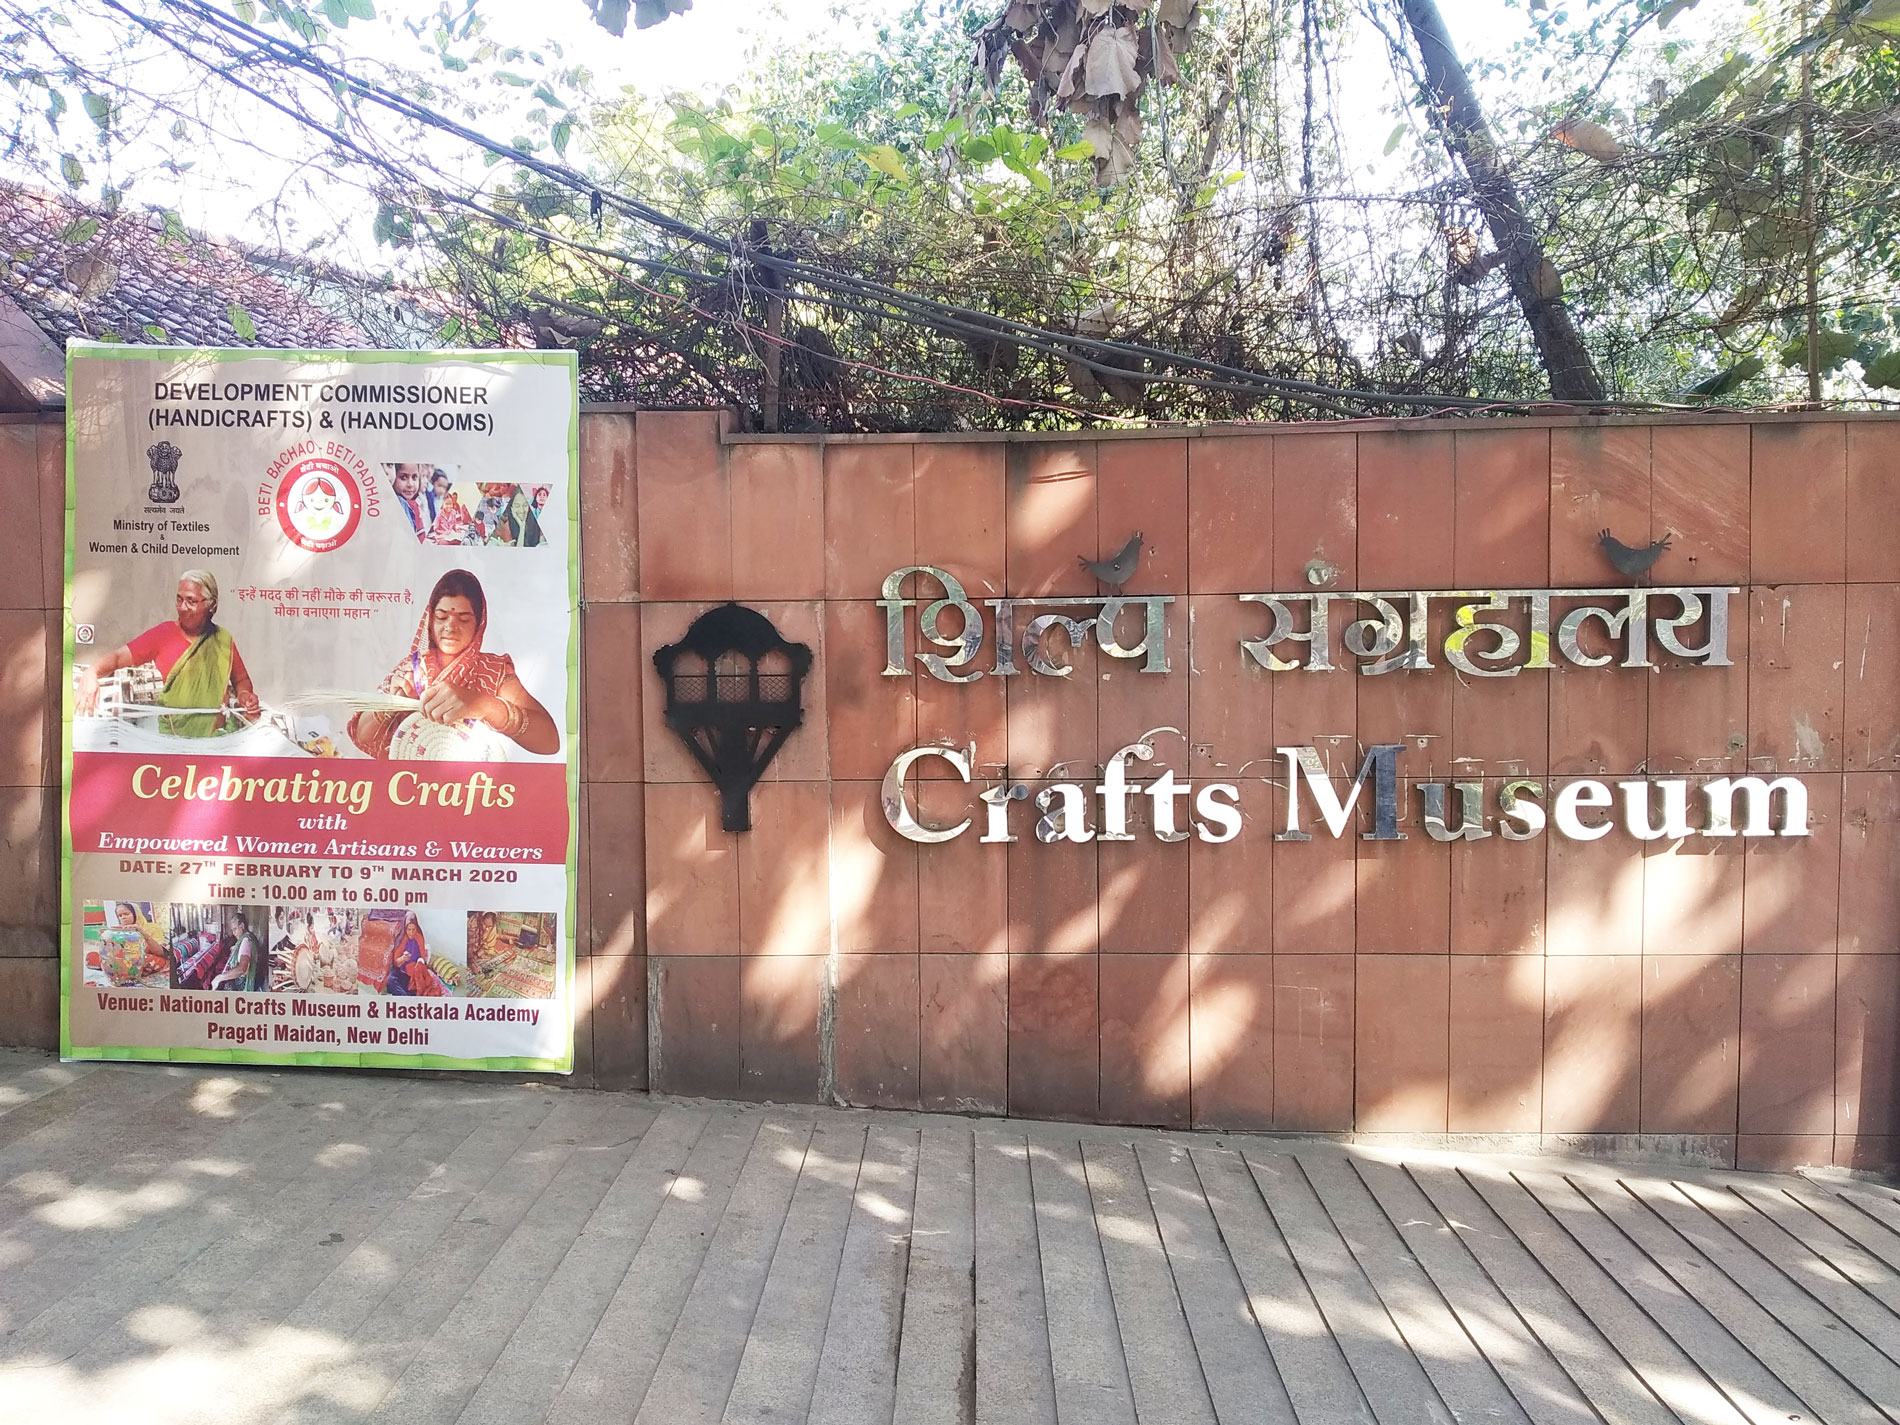 national crafts museum delhi case study pdf